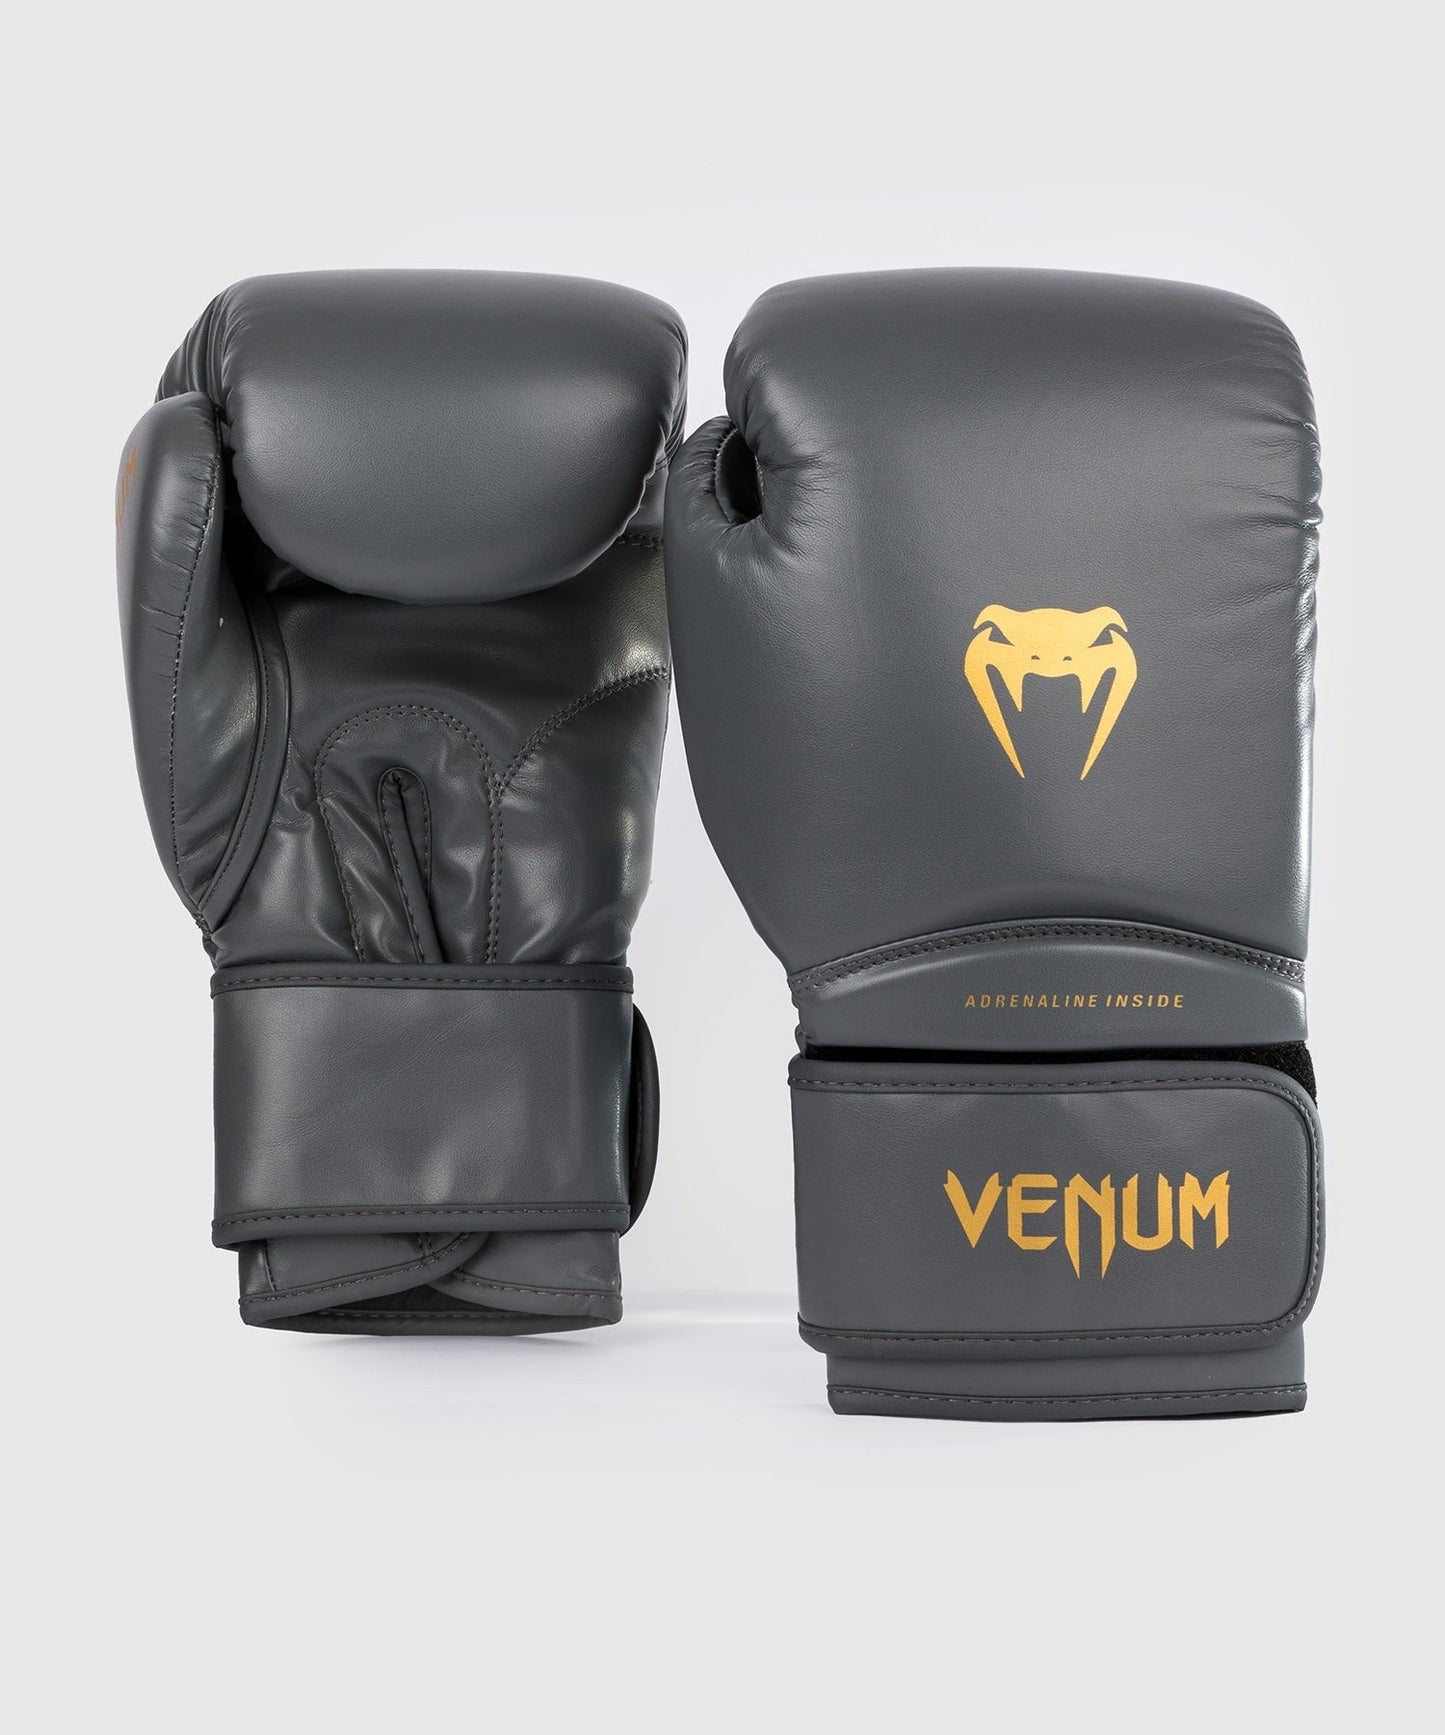 Venum Contender 1.5 Boxing Gloves - Grey/Gold